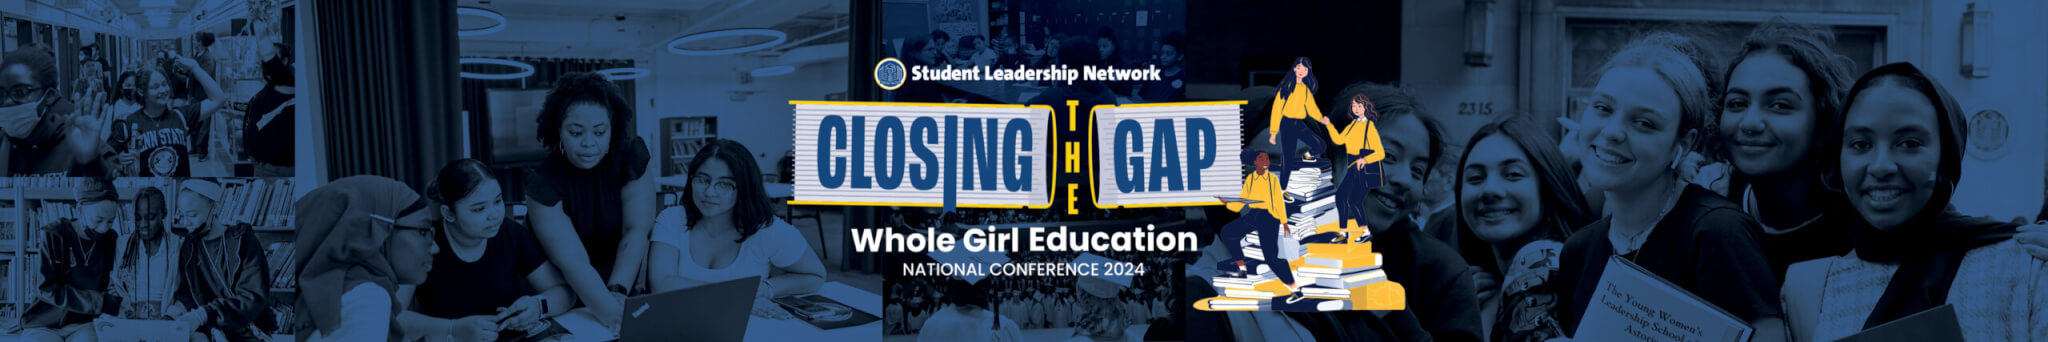 WholeGirl Education National Conference 2024: Closing the Gap